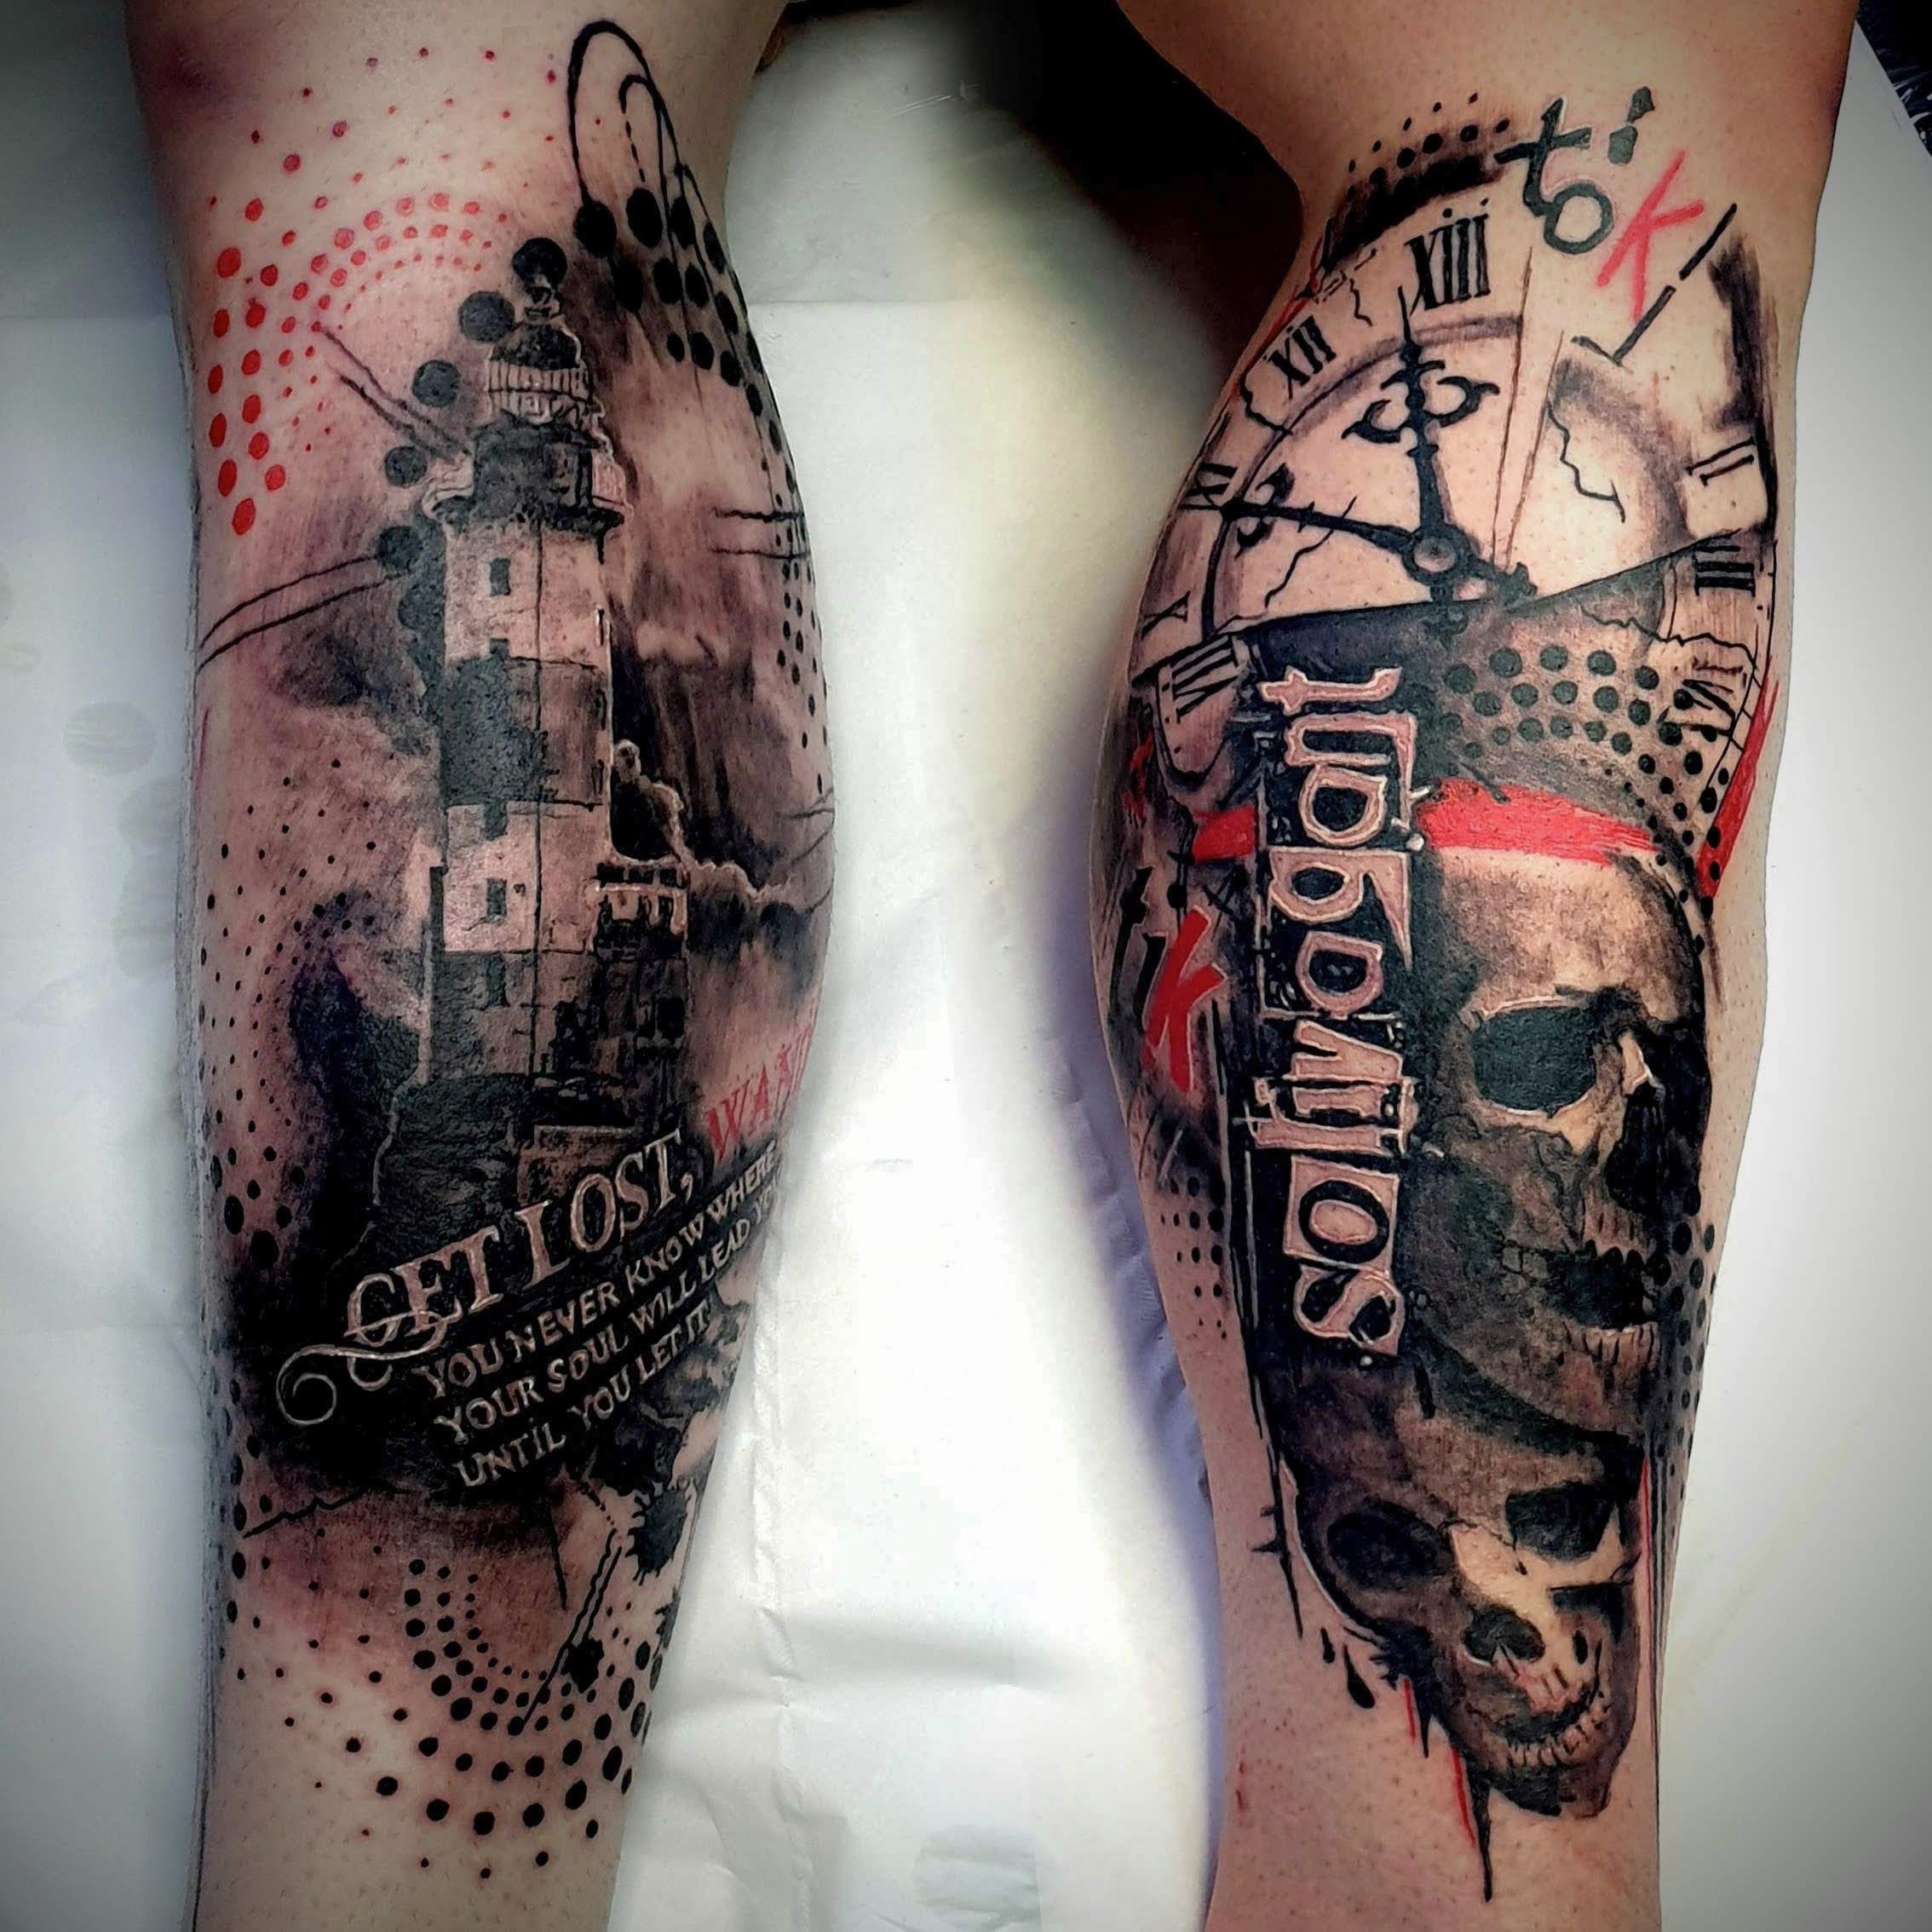 Front of Arm Tattoos | TikTok